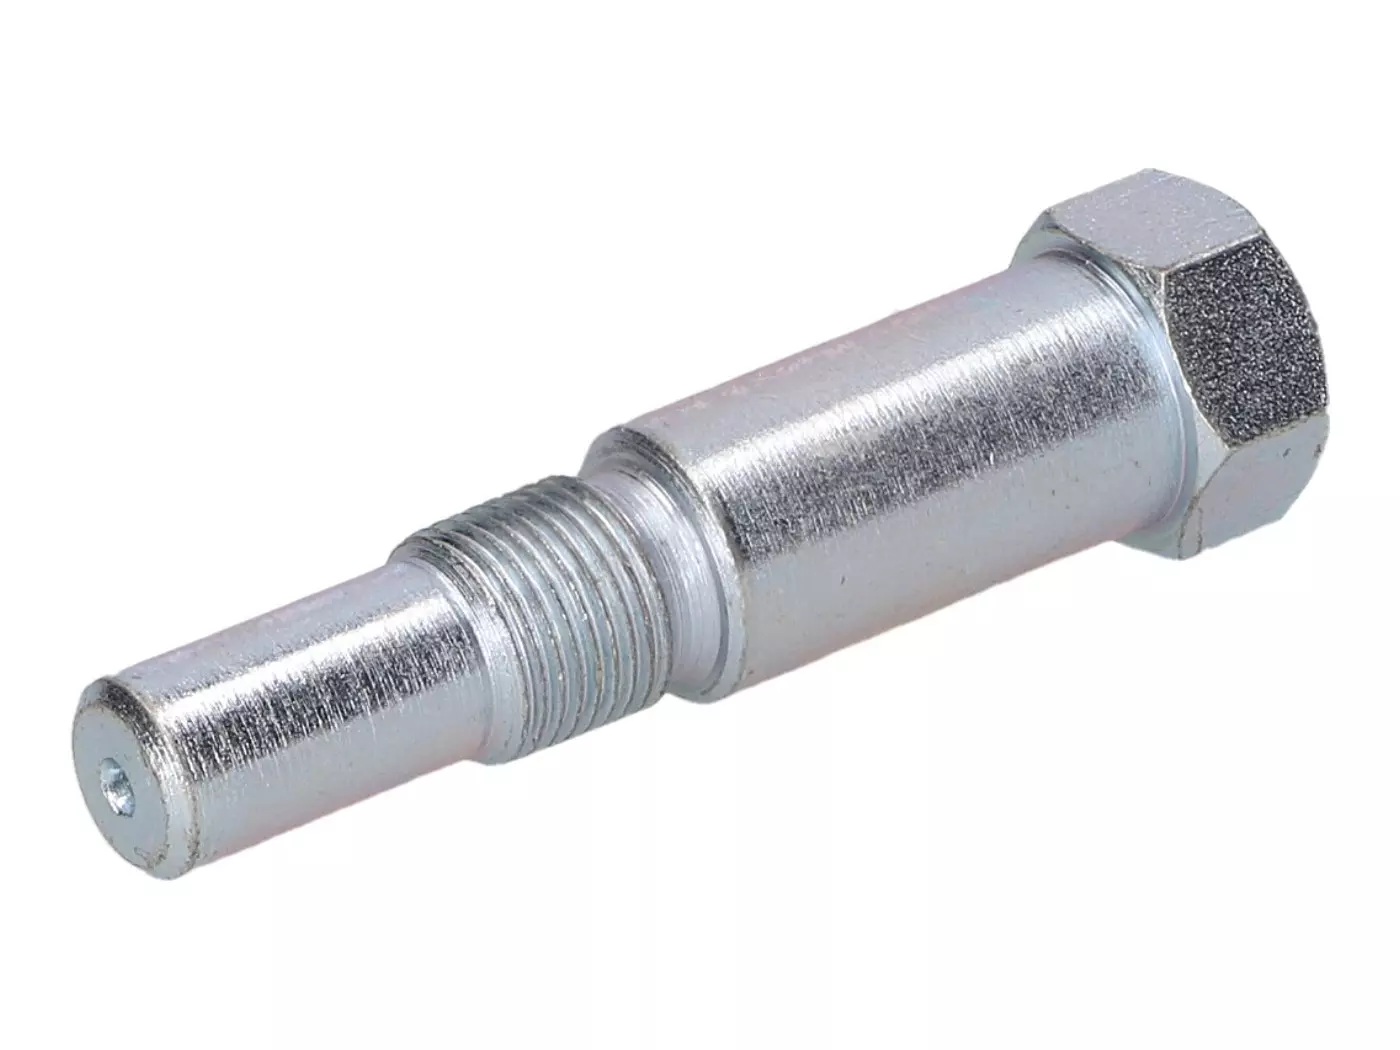 Piston Stopper 12mm Thread For Spark Plug Type D, DC